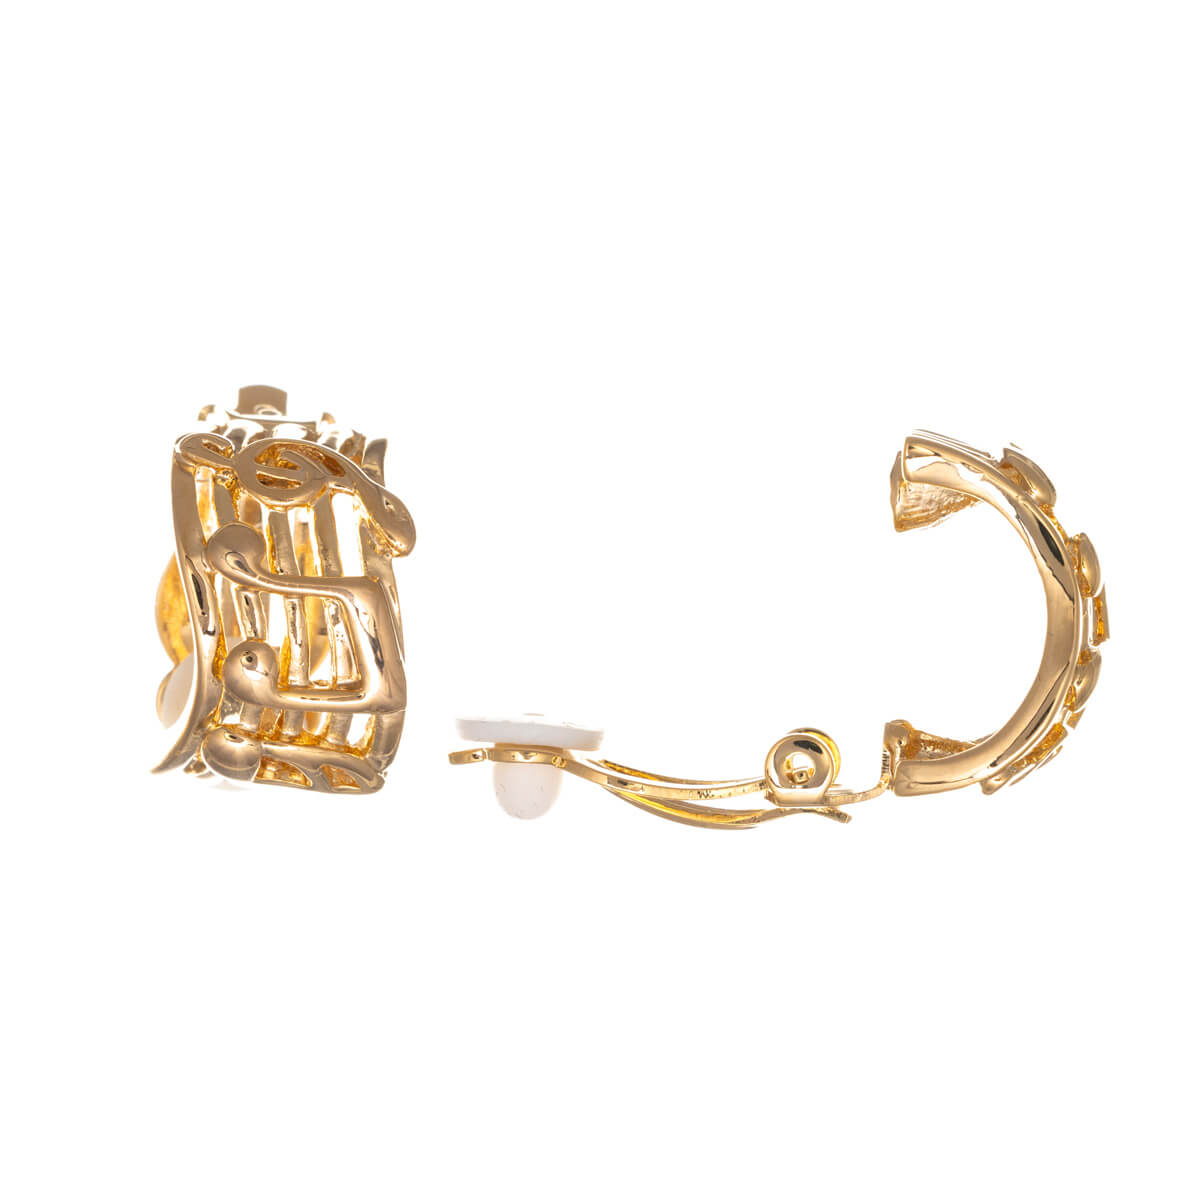 Half ring clip earrings with music keys